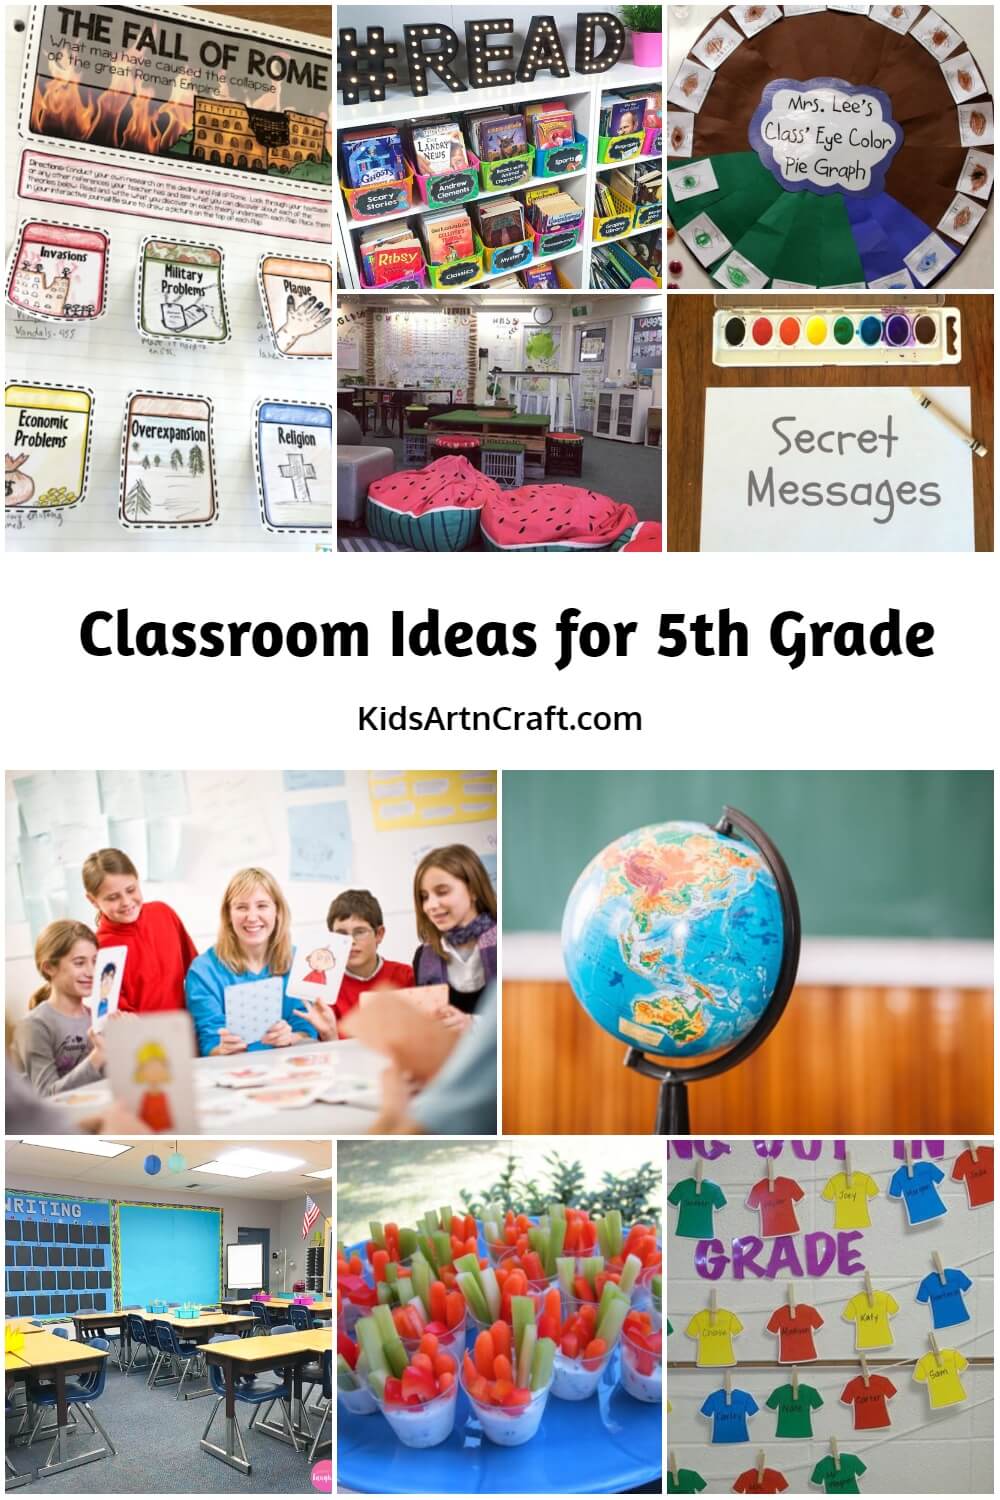 Classroom ideas for 5th grade